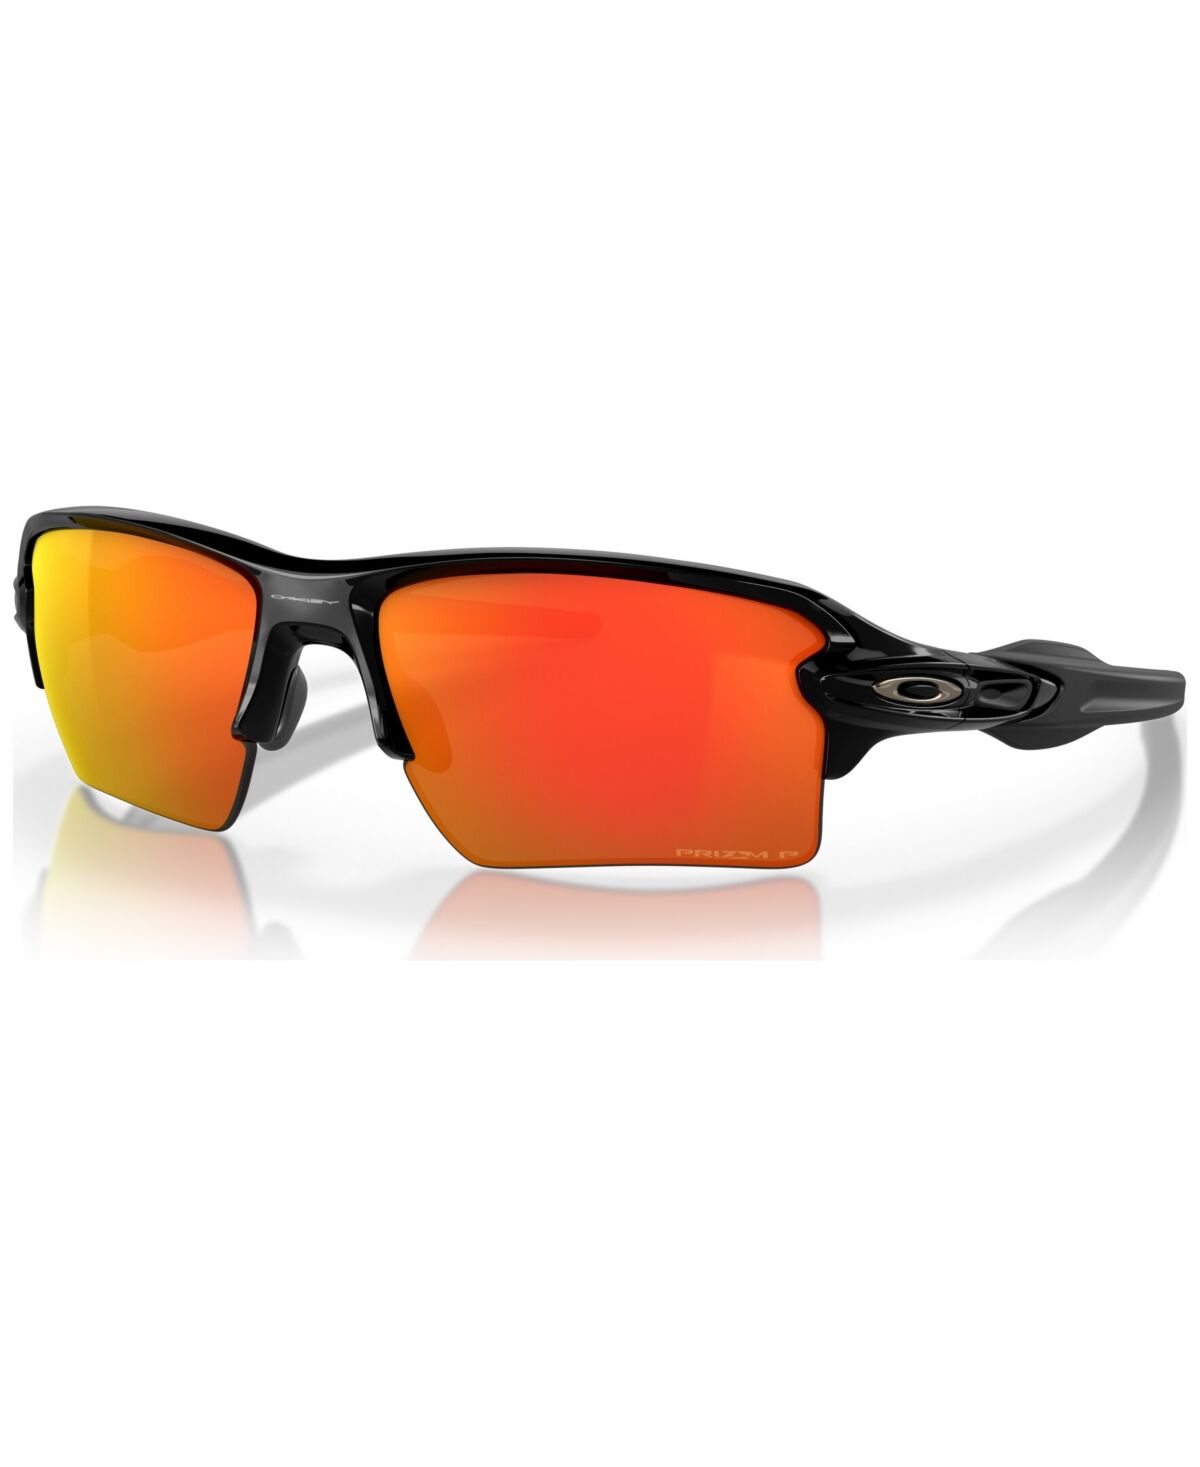 Oakley Sunglasses, OO9188 Flak 2.0 Xl - Polished Black